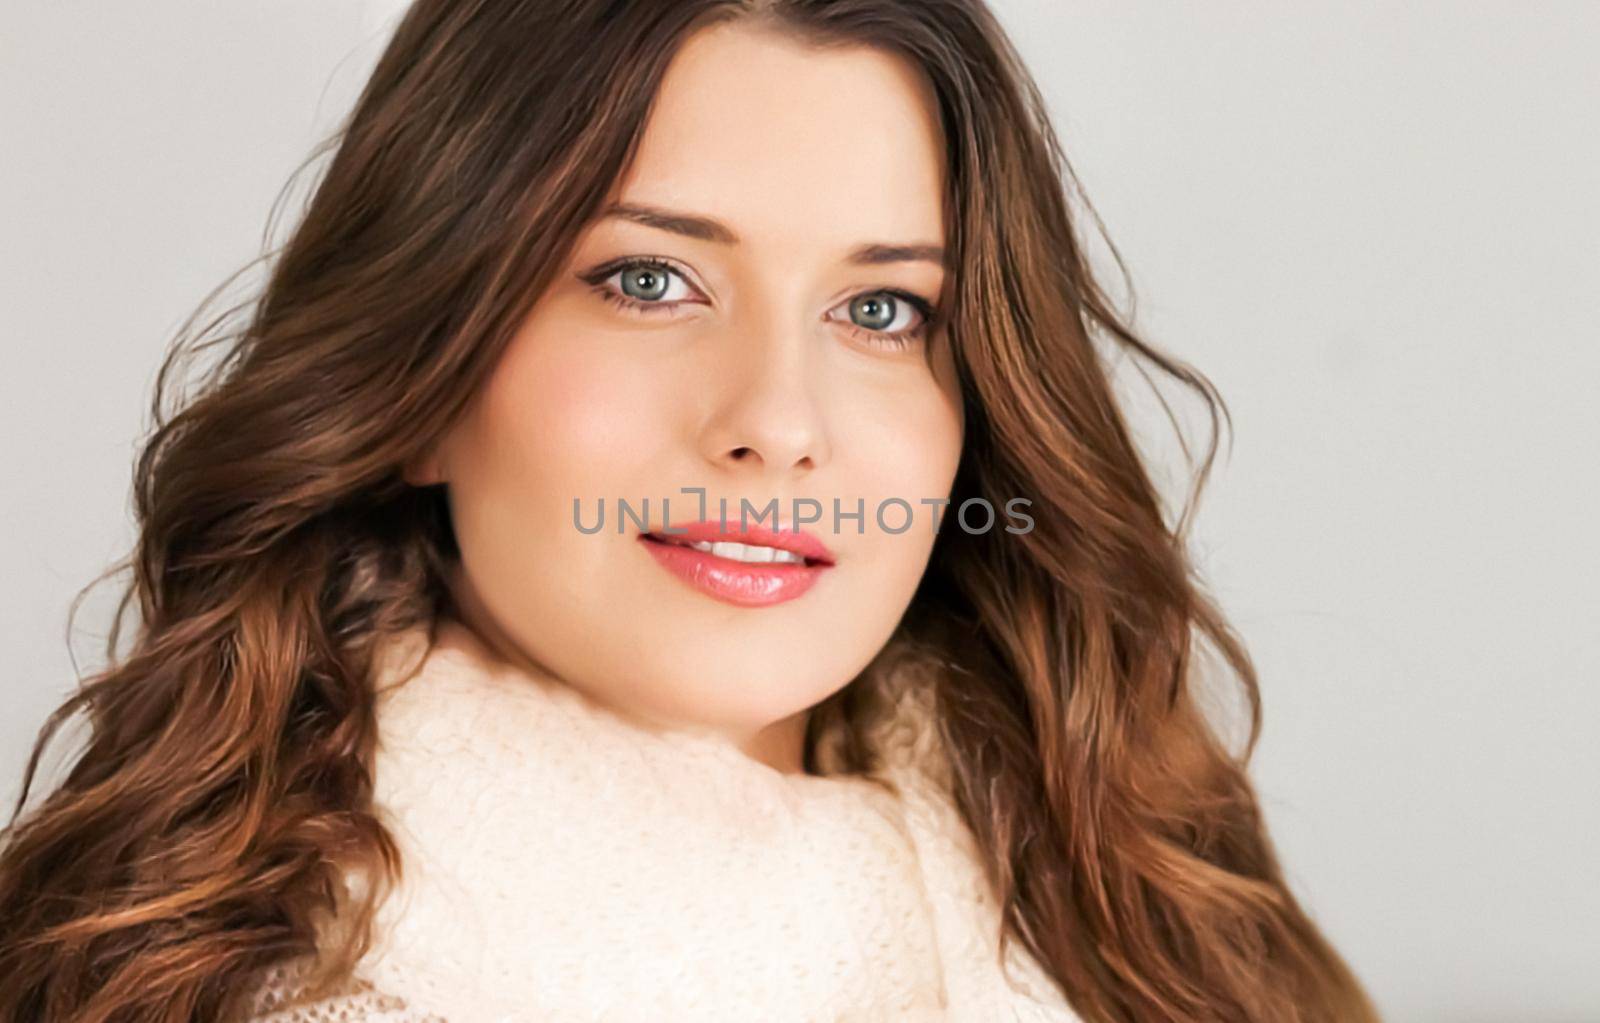 Autumn winter fashion and knitwear, beautiful woman wearing warm knitted scarf, close-up portrait